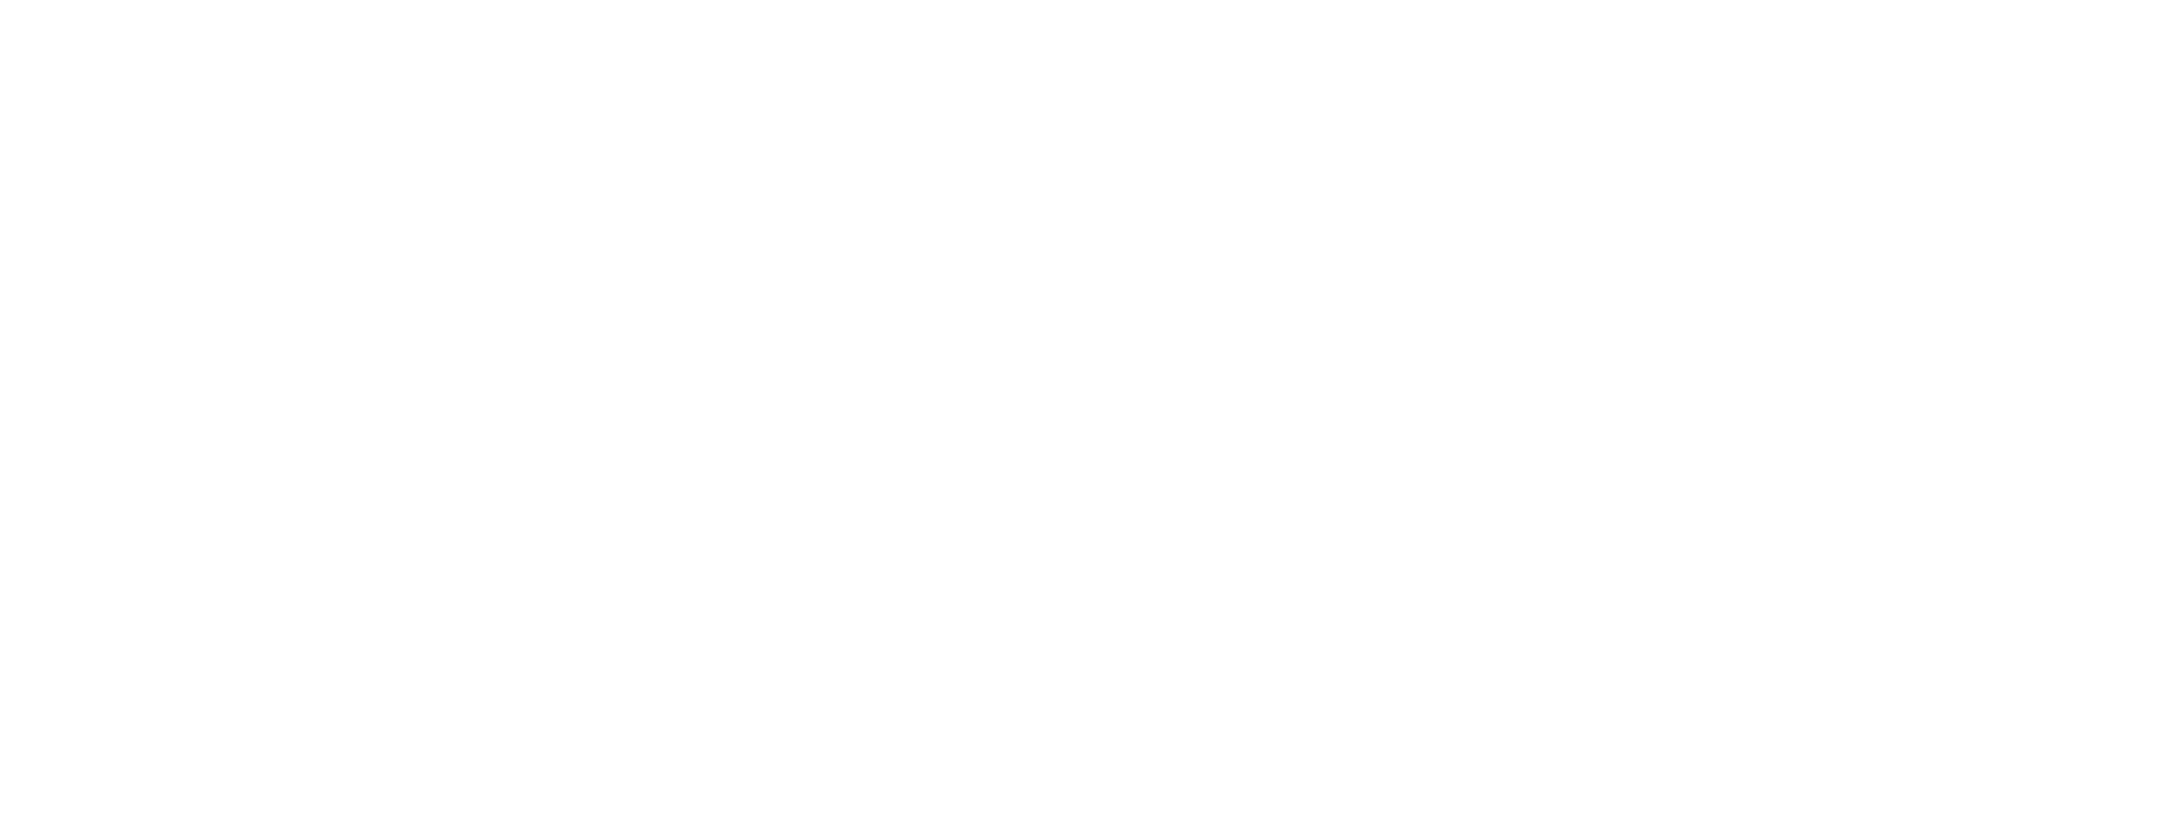 Fabmerc industrial engineer